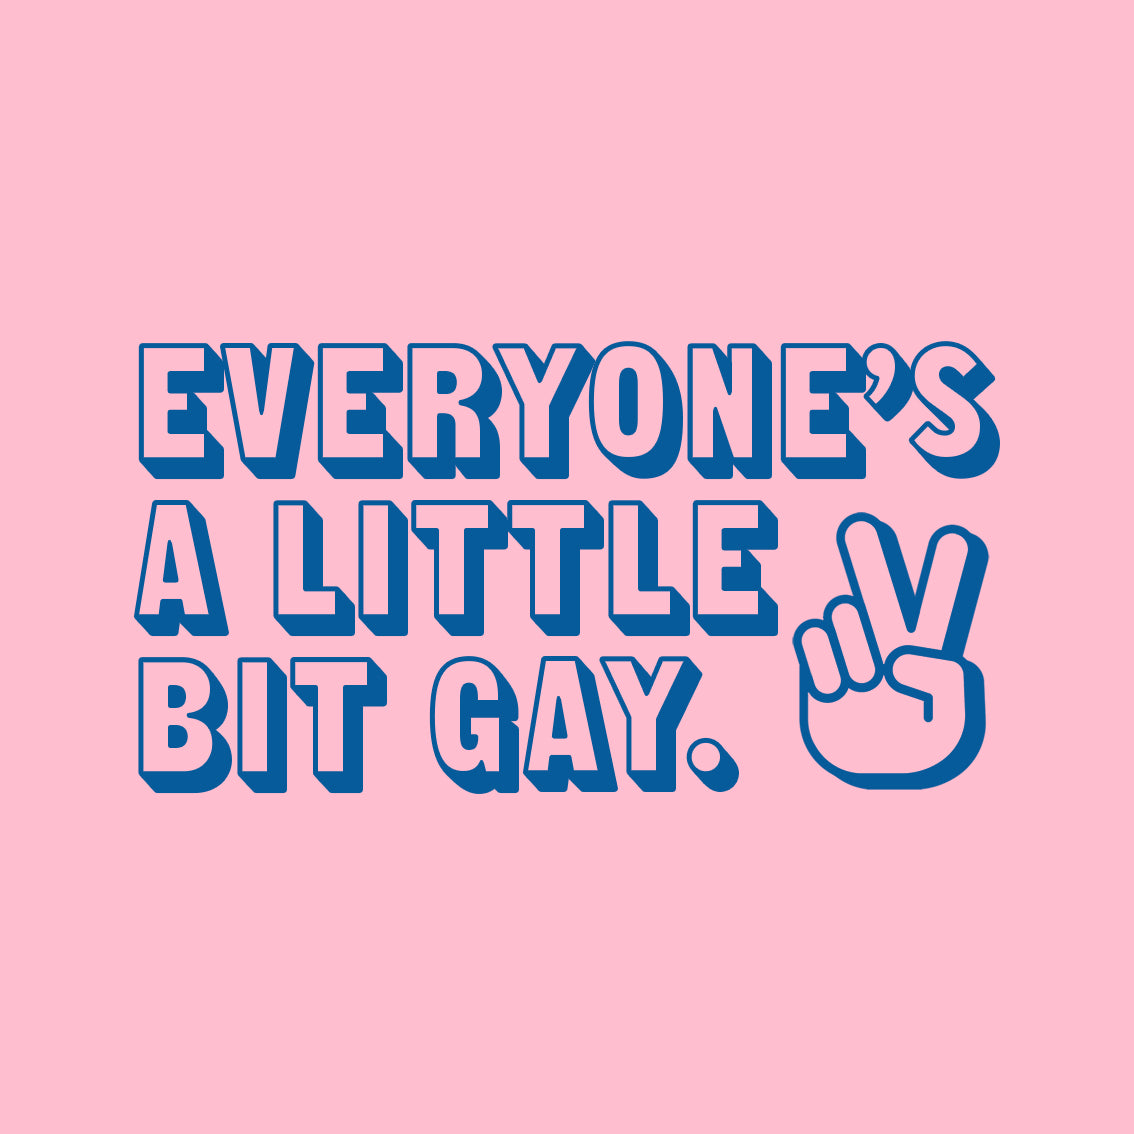 Everyone's a Little Bit Gay